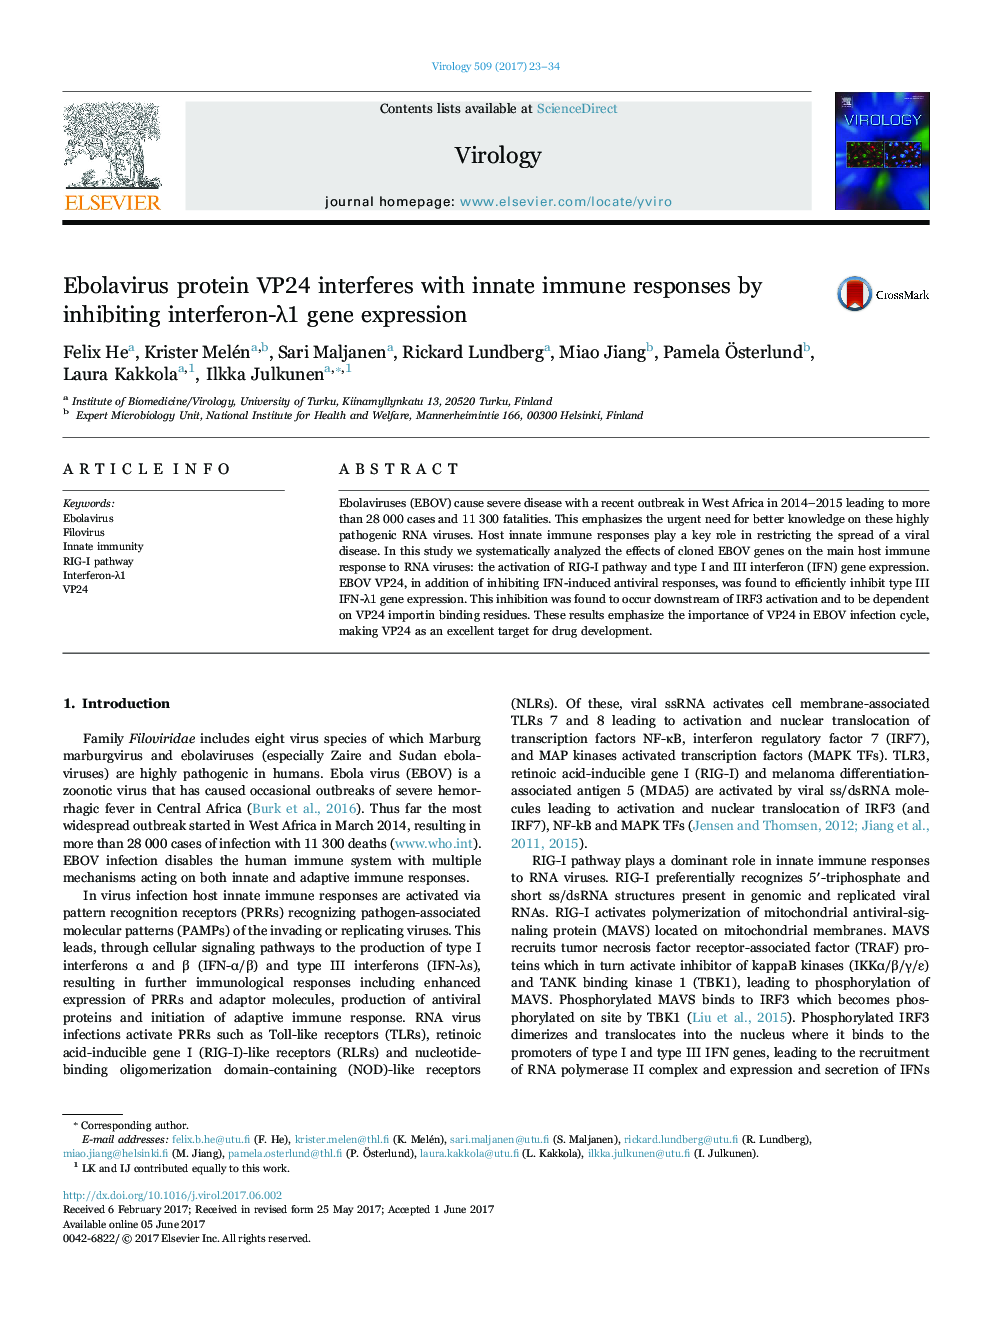 Ebolavirus protein VP24 interferes with innate immune responses by inhibiting interferon-Î»1 gene expression